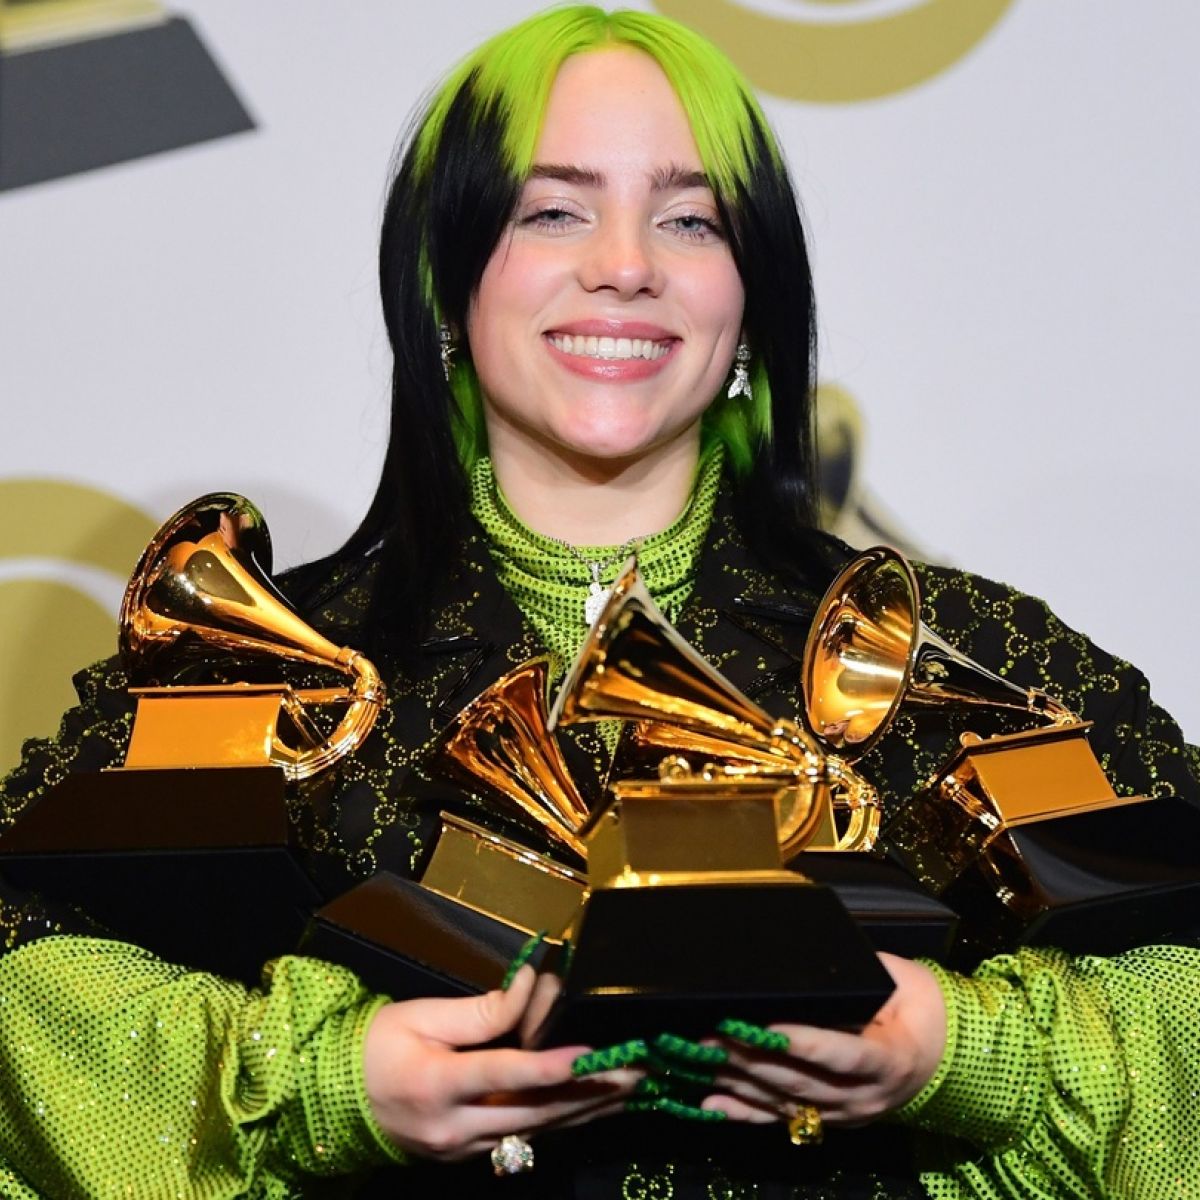 Grammy awards 2020: Billie Eilish big wins sees new star anointed